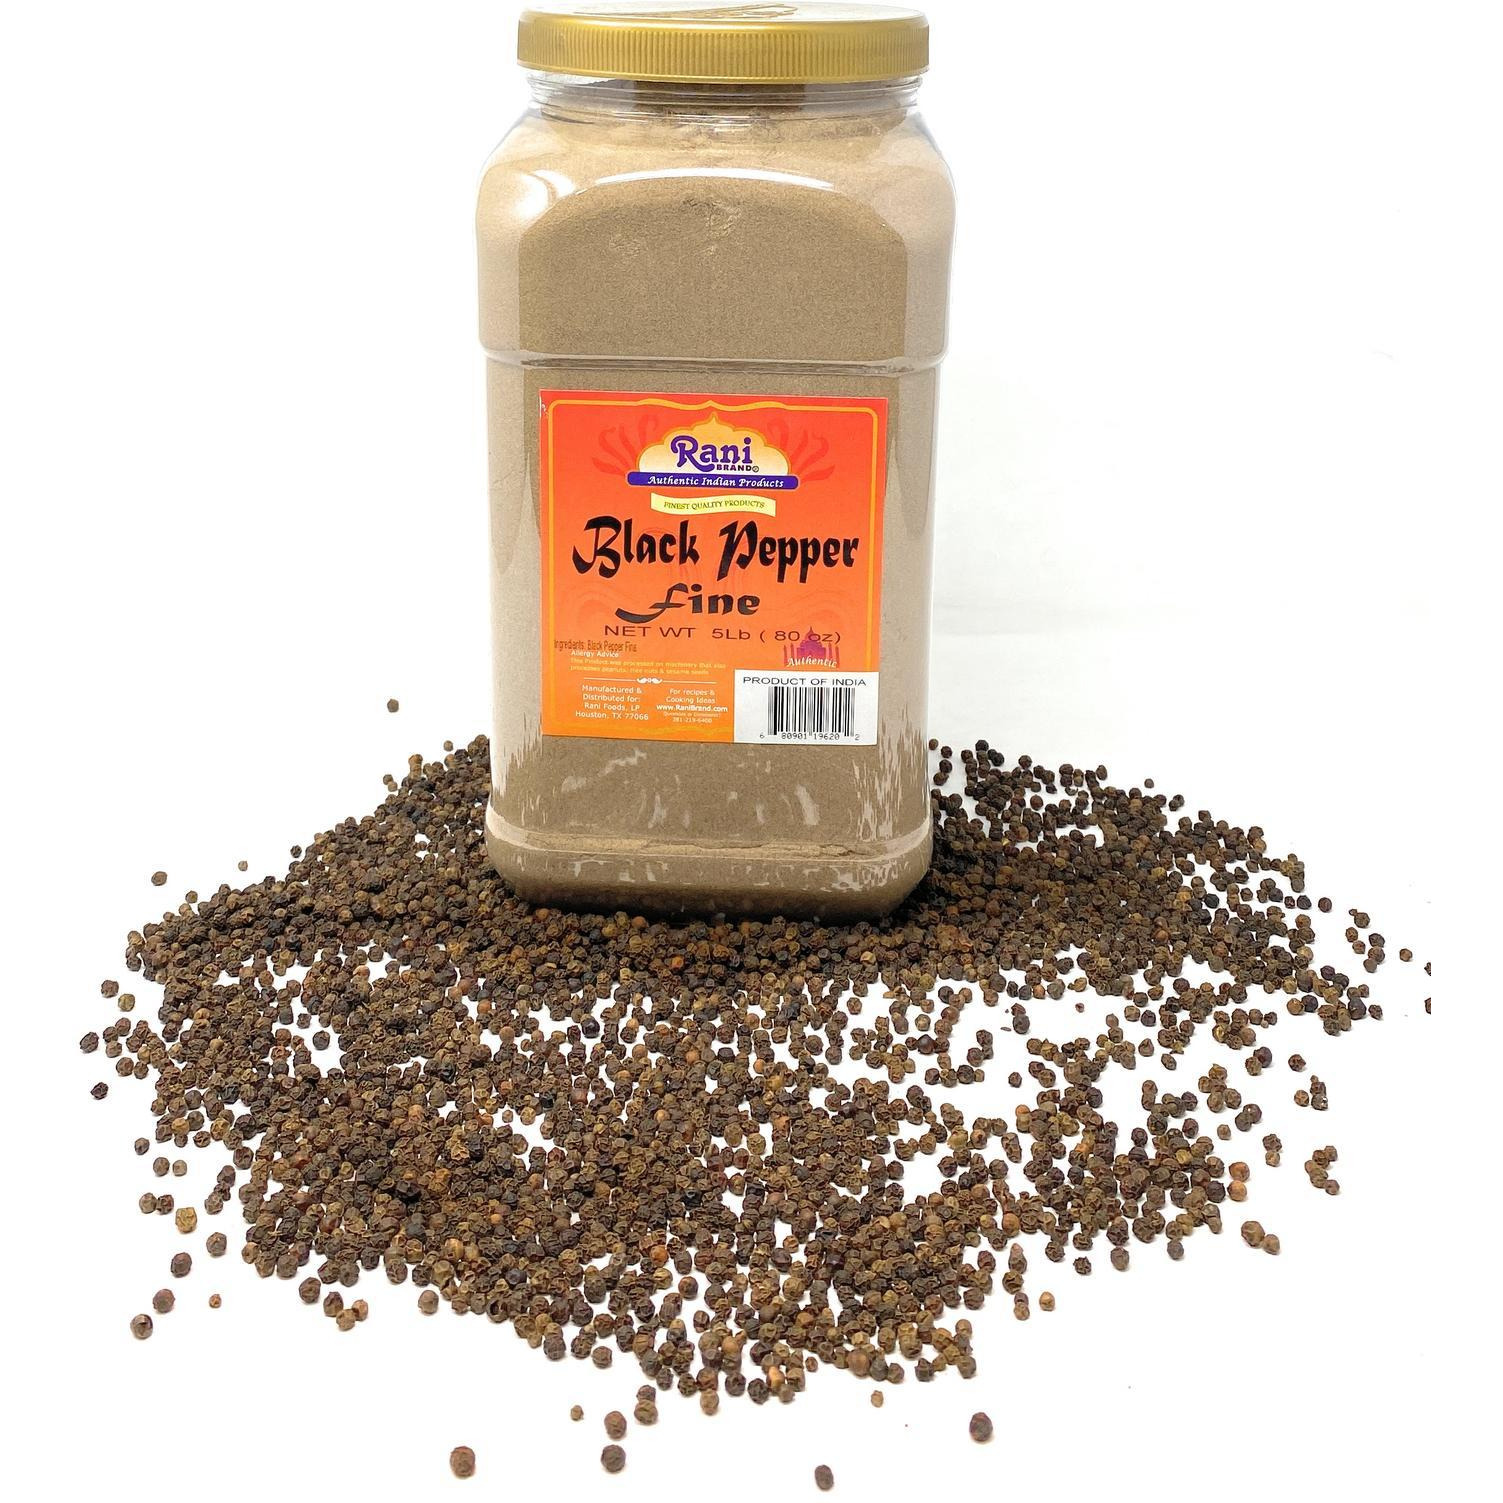 Rani Black Pepper Fine Powder 80 Mesh, Premium Indian 80oz (5lbs) 5 Pound ~ PET Jar, Gluten Friendly, Non-GMO, All Natural